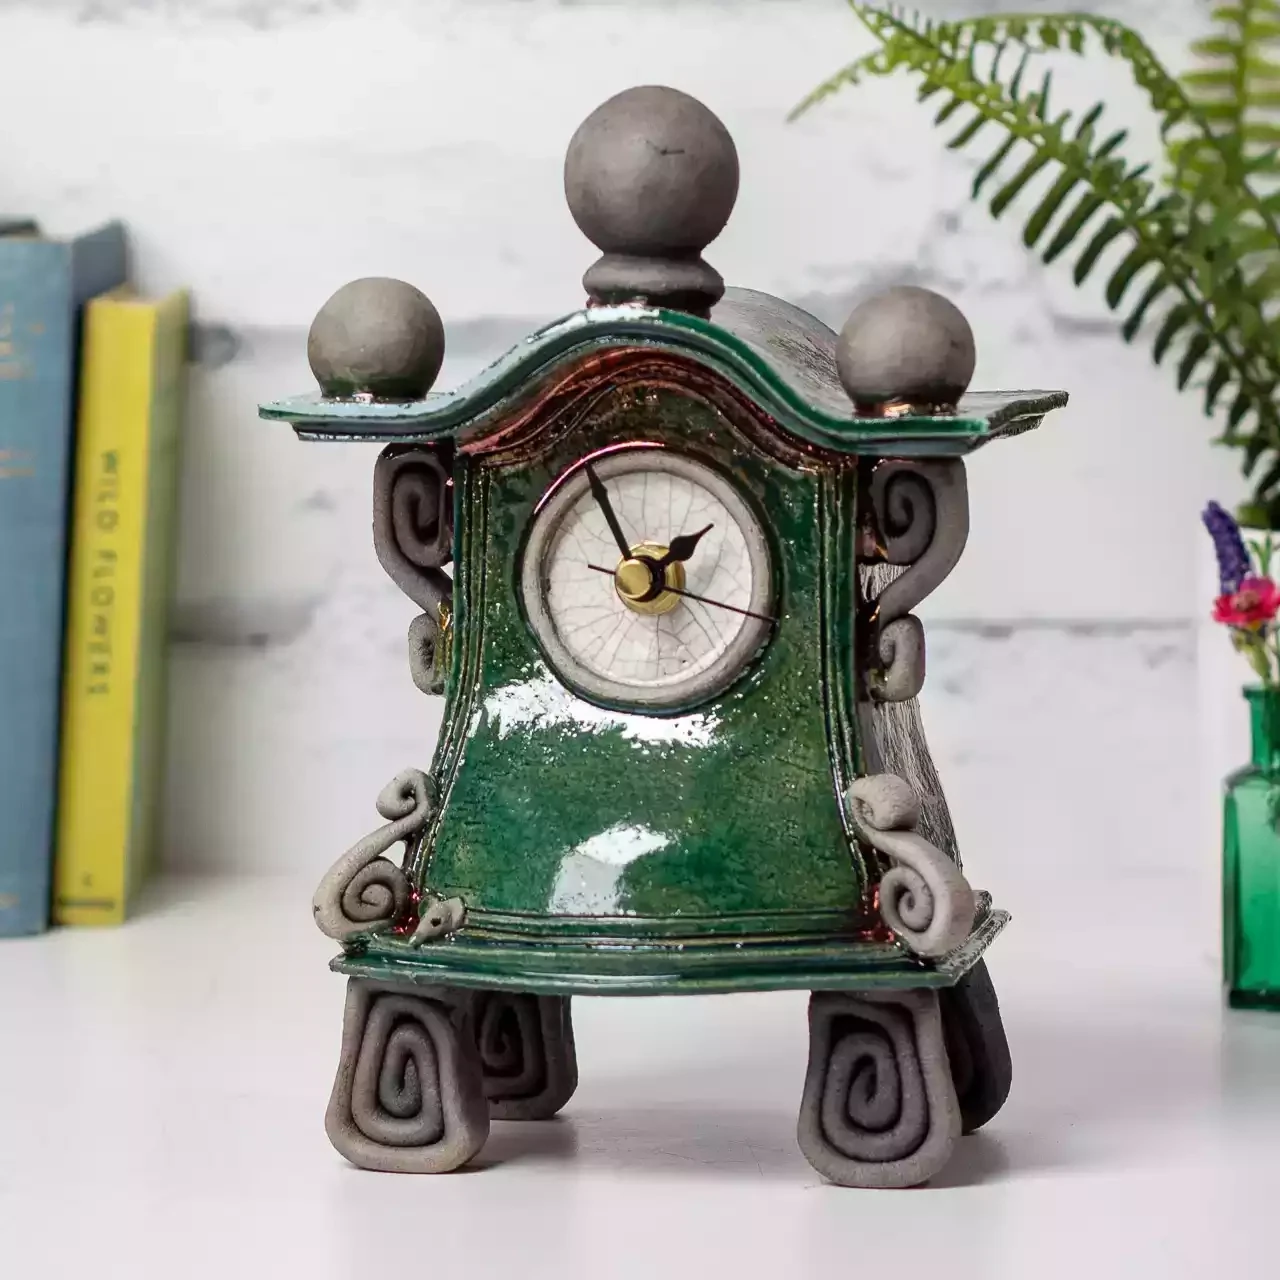 Quirky Ceramic Mantel Clock - Small - Emerald Green by Ian Roberts